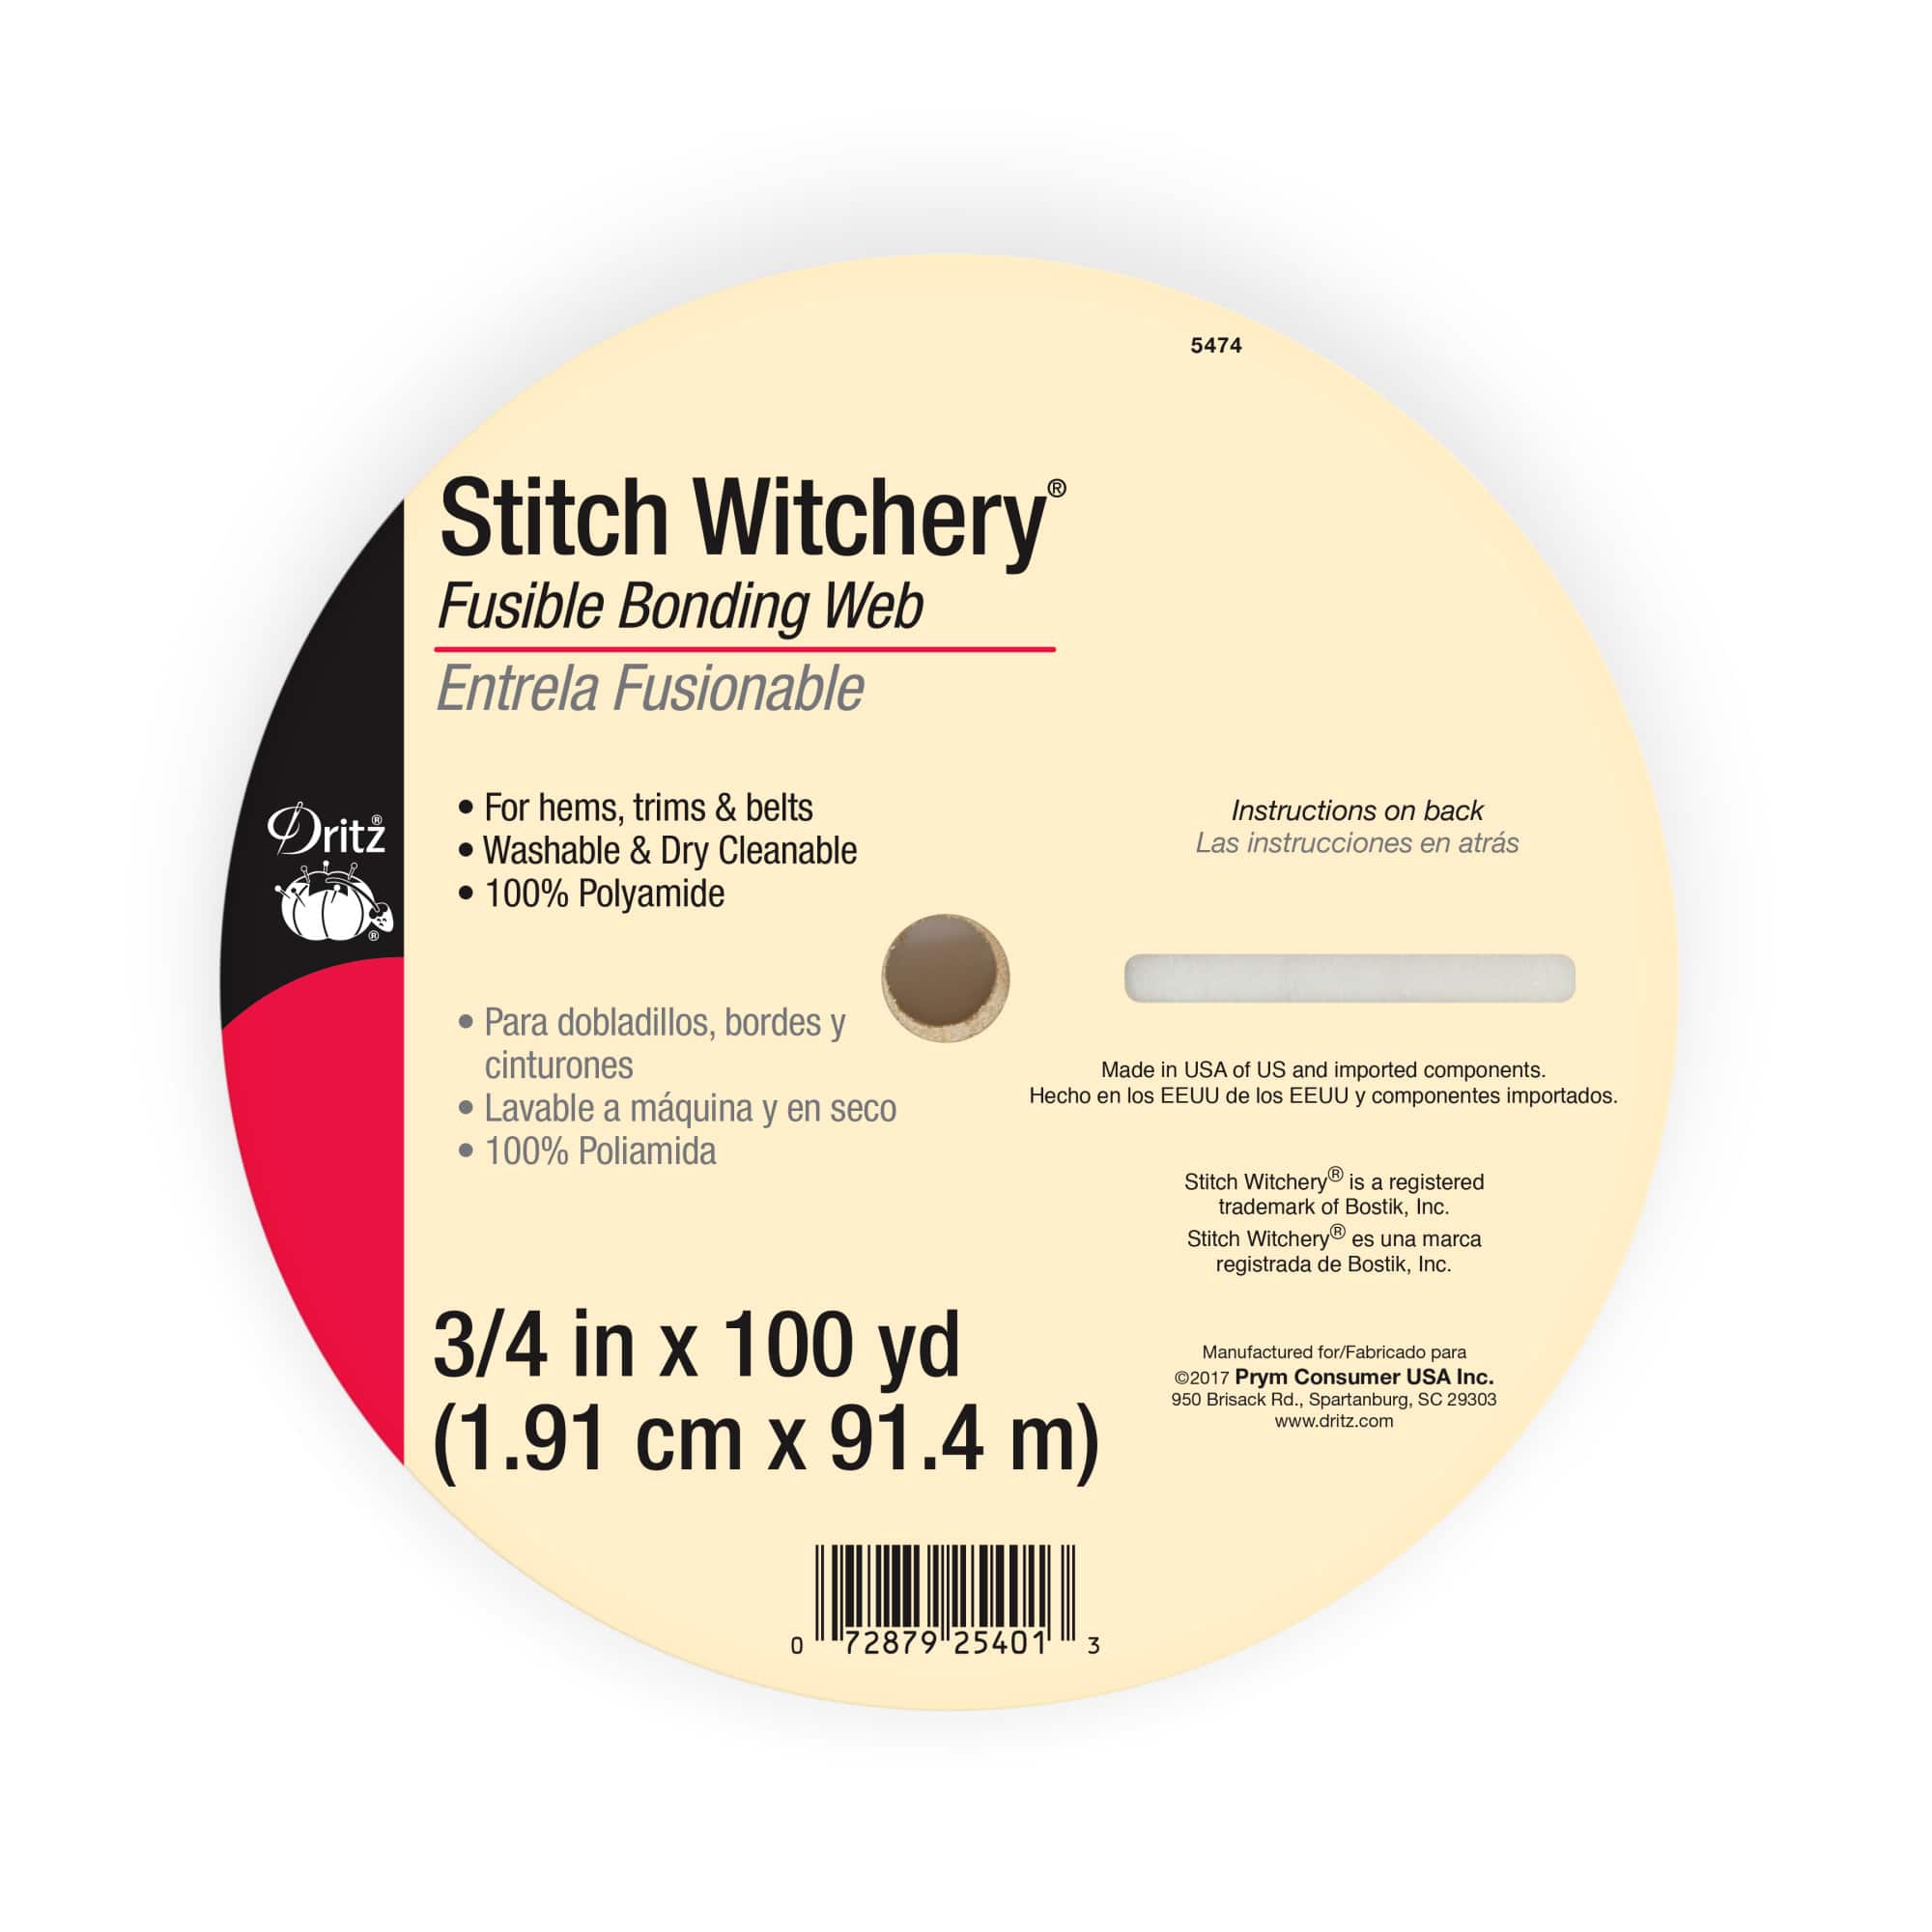 Stitch Witchery Fusible Bonding Web